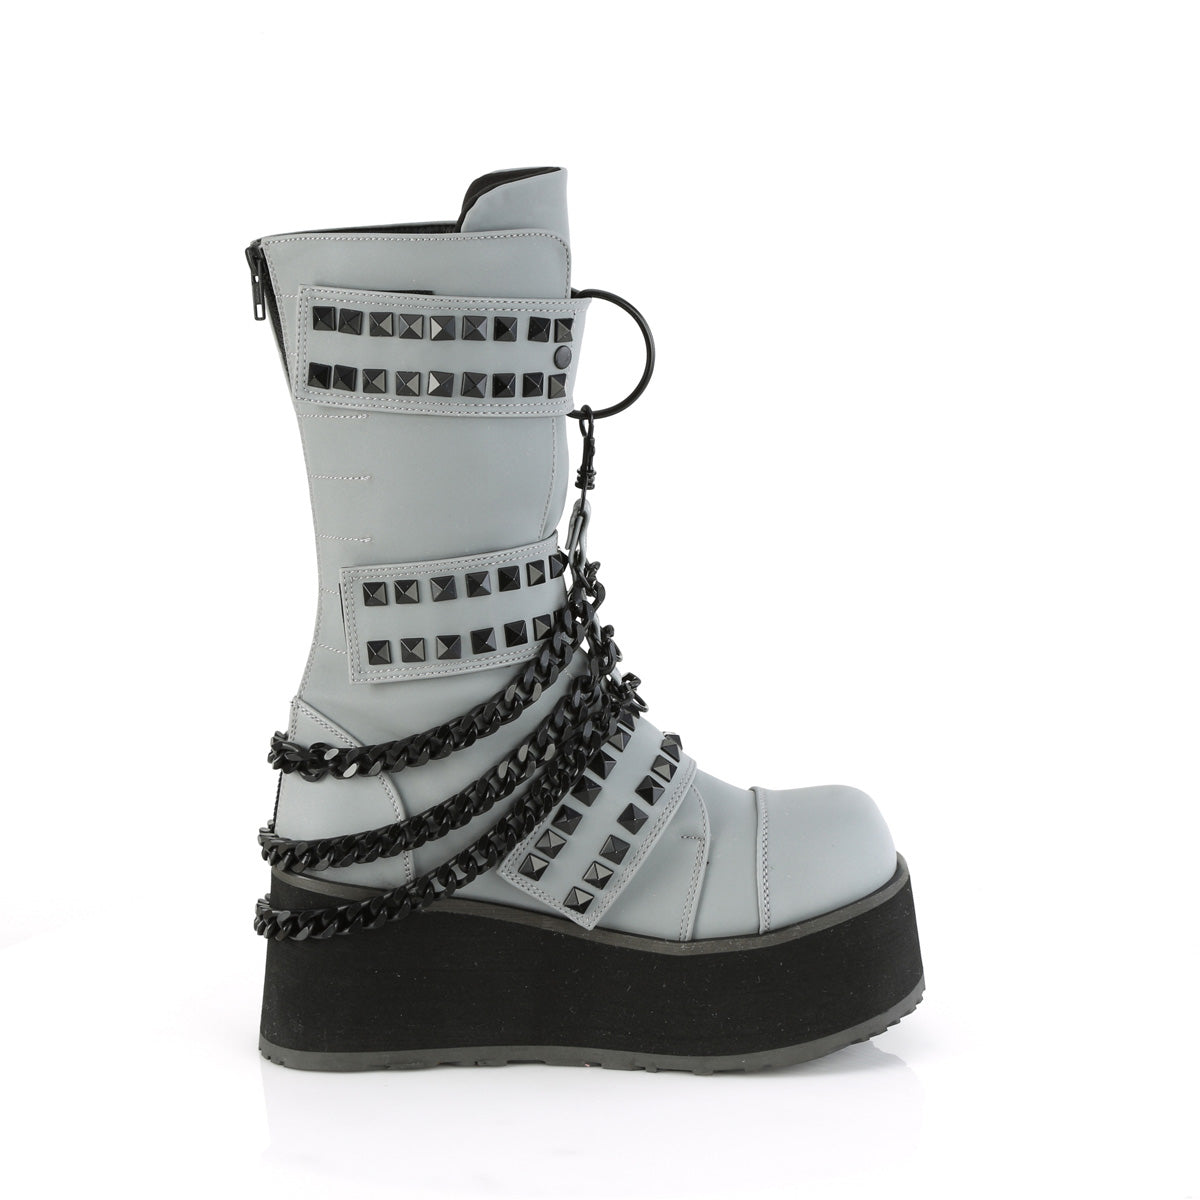 TRASHVILLE-138 Demonia Grey Multi Reflective Vegan Leather Unisex Platform Shoes & Boots [Alternative Footwear]